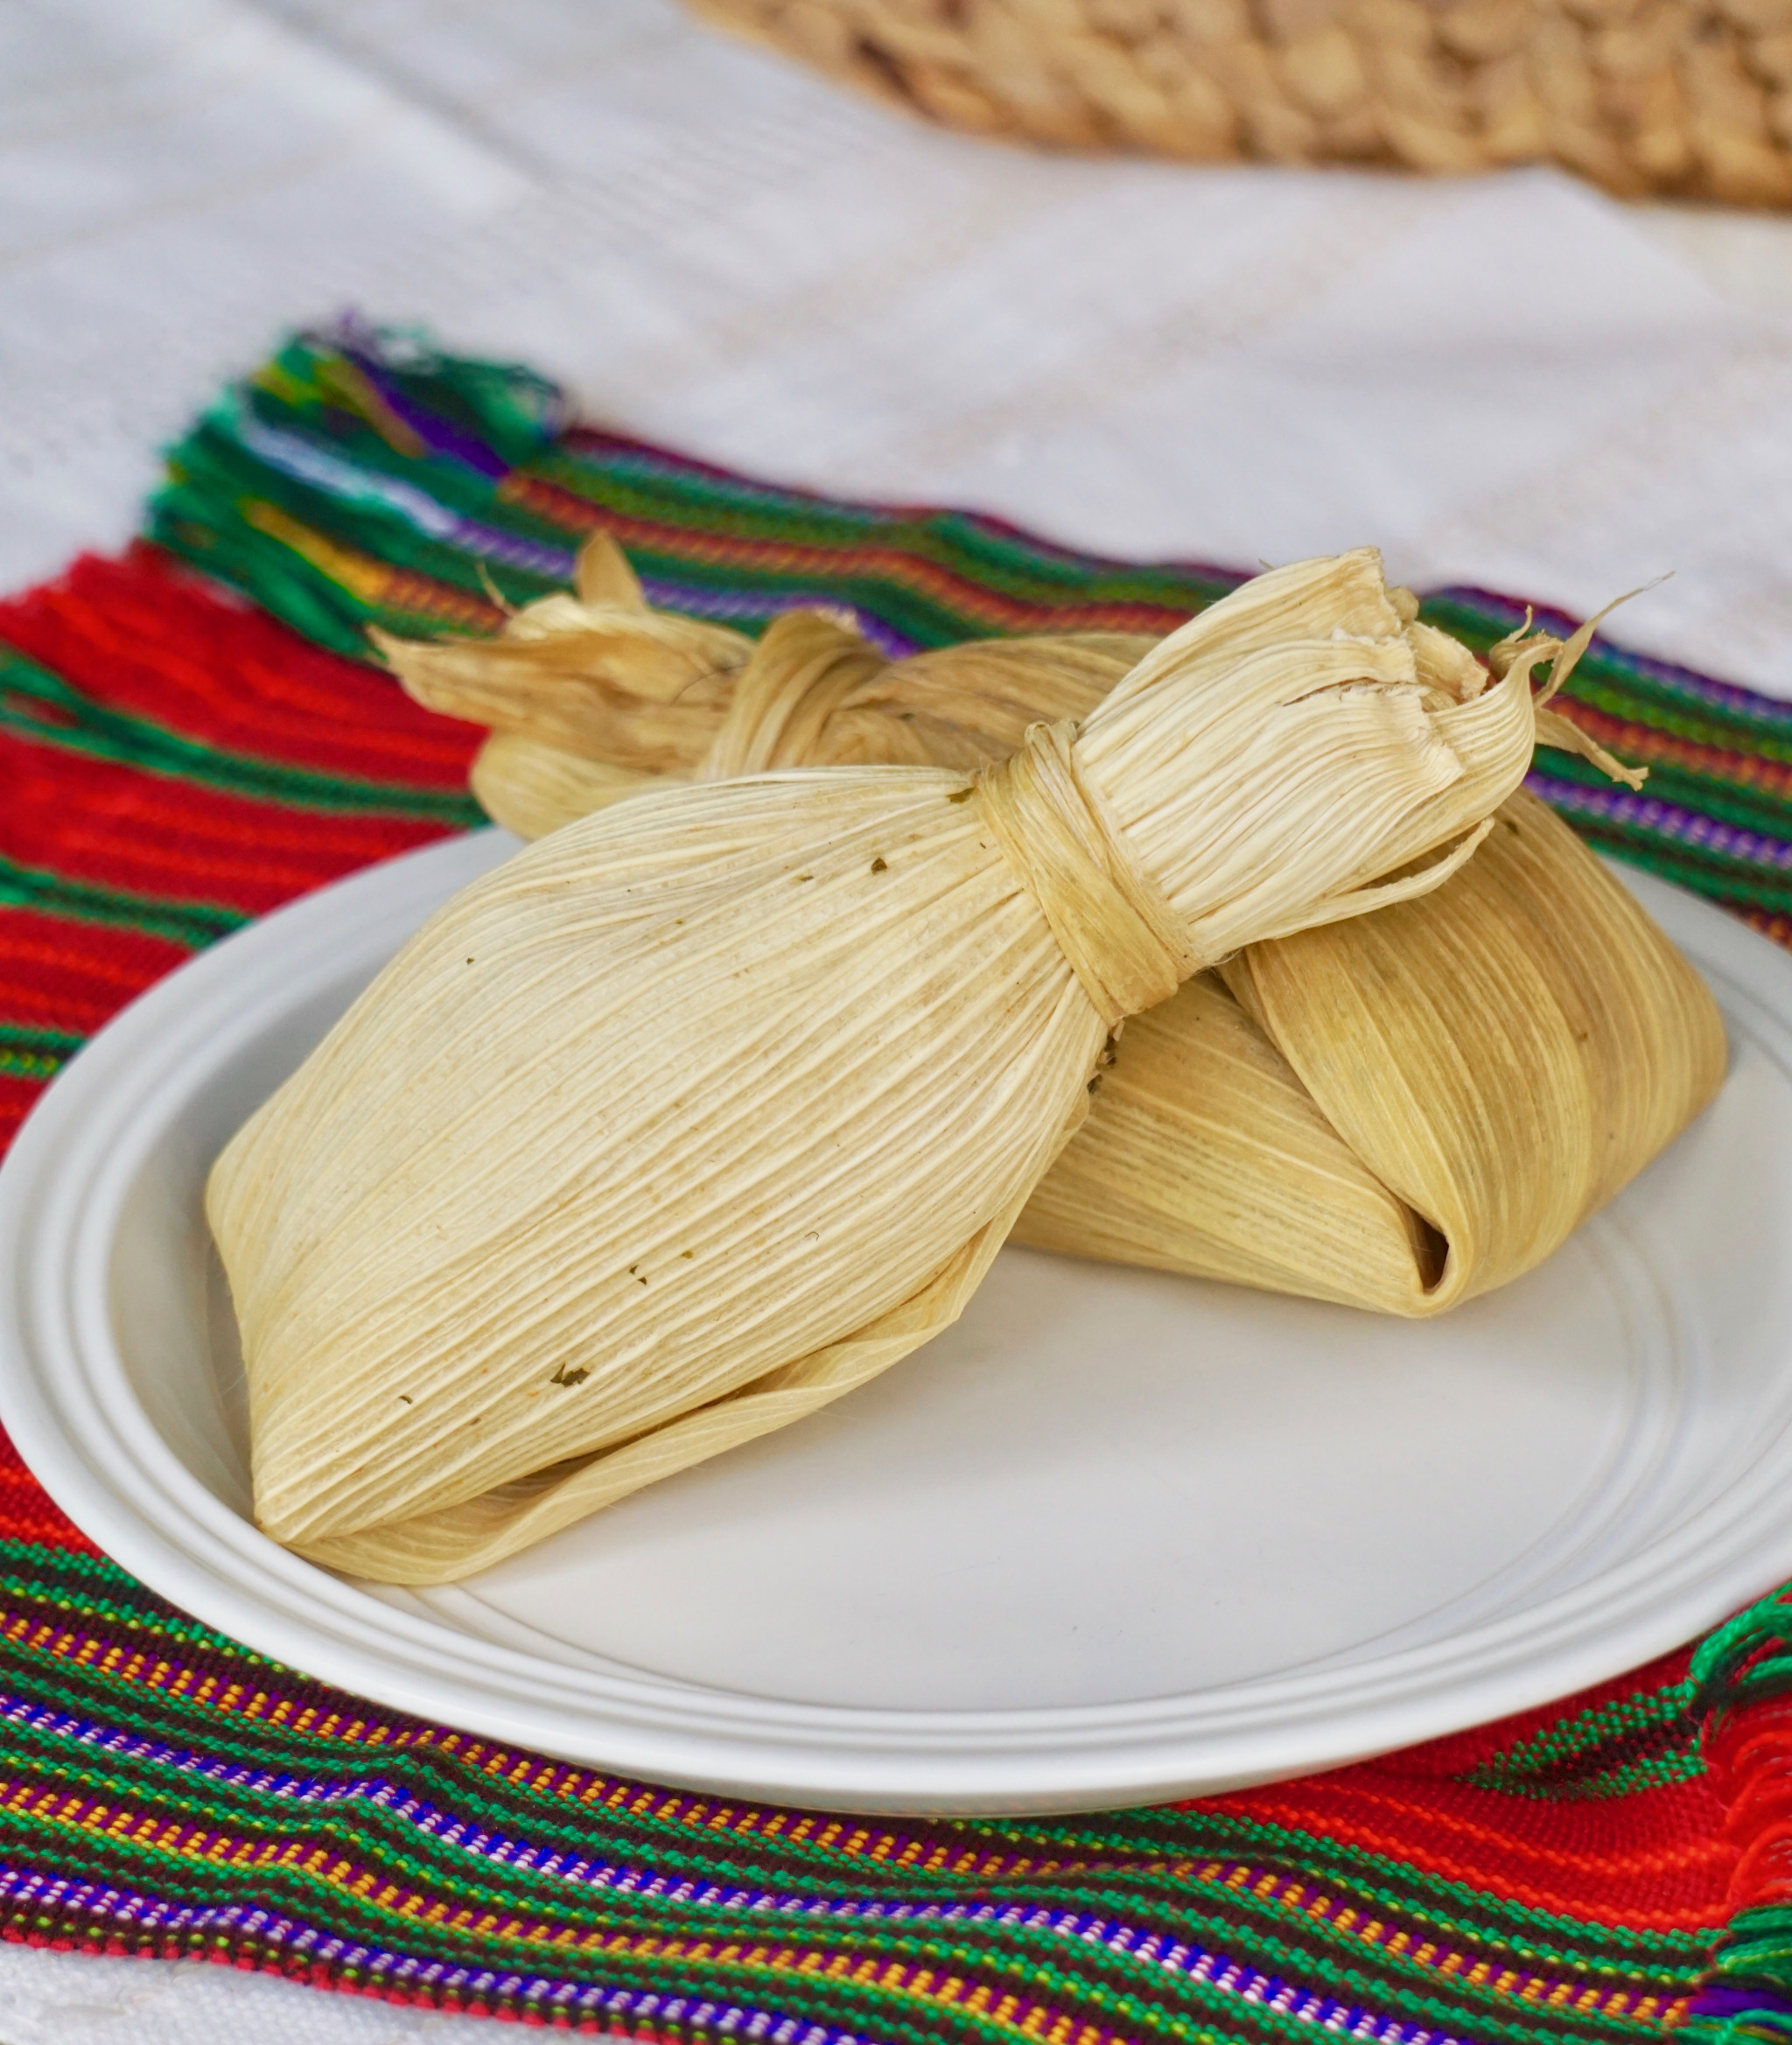 Guatemalan tamales de chipilin